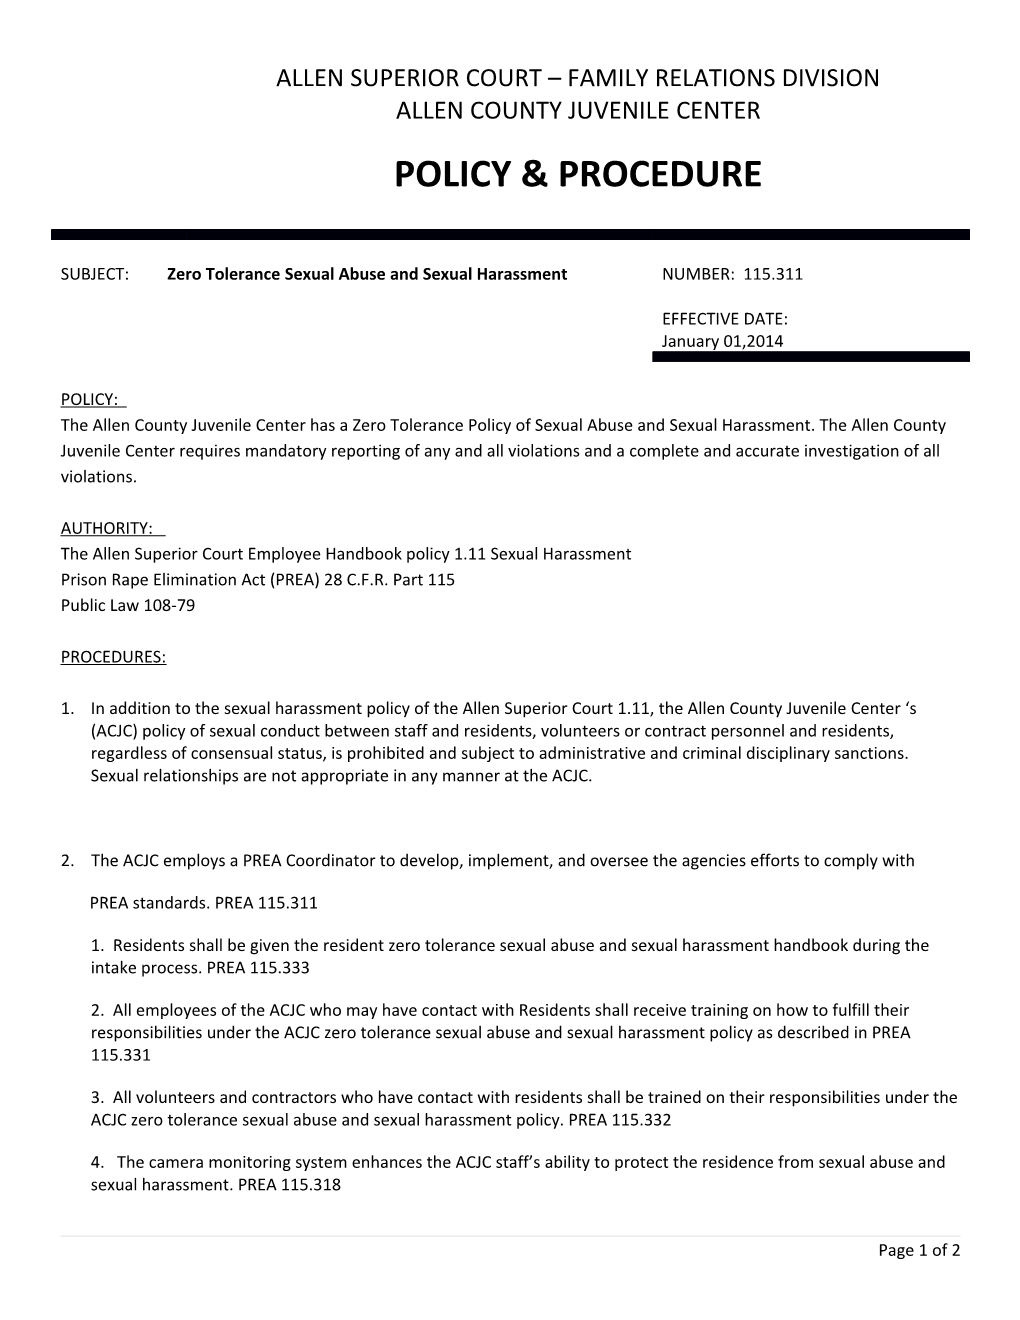 The Allen Superior Court Employee Handbook Policy 1.11 Sexual Harassment